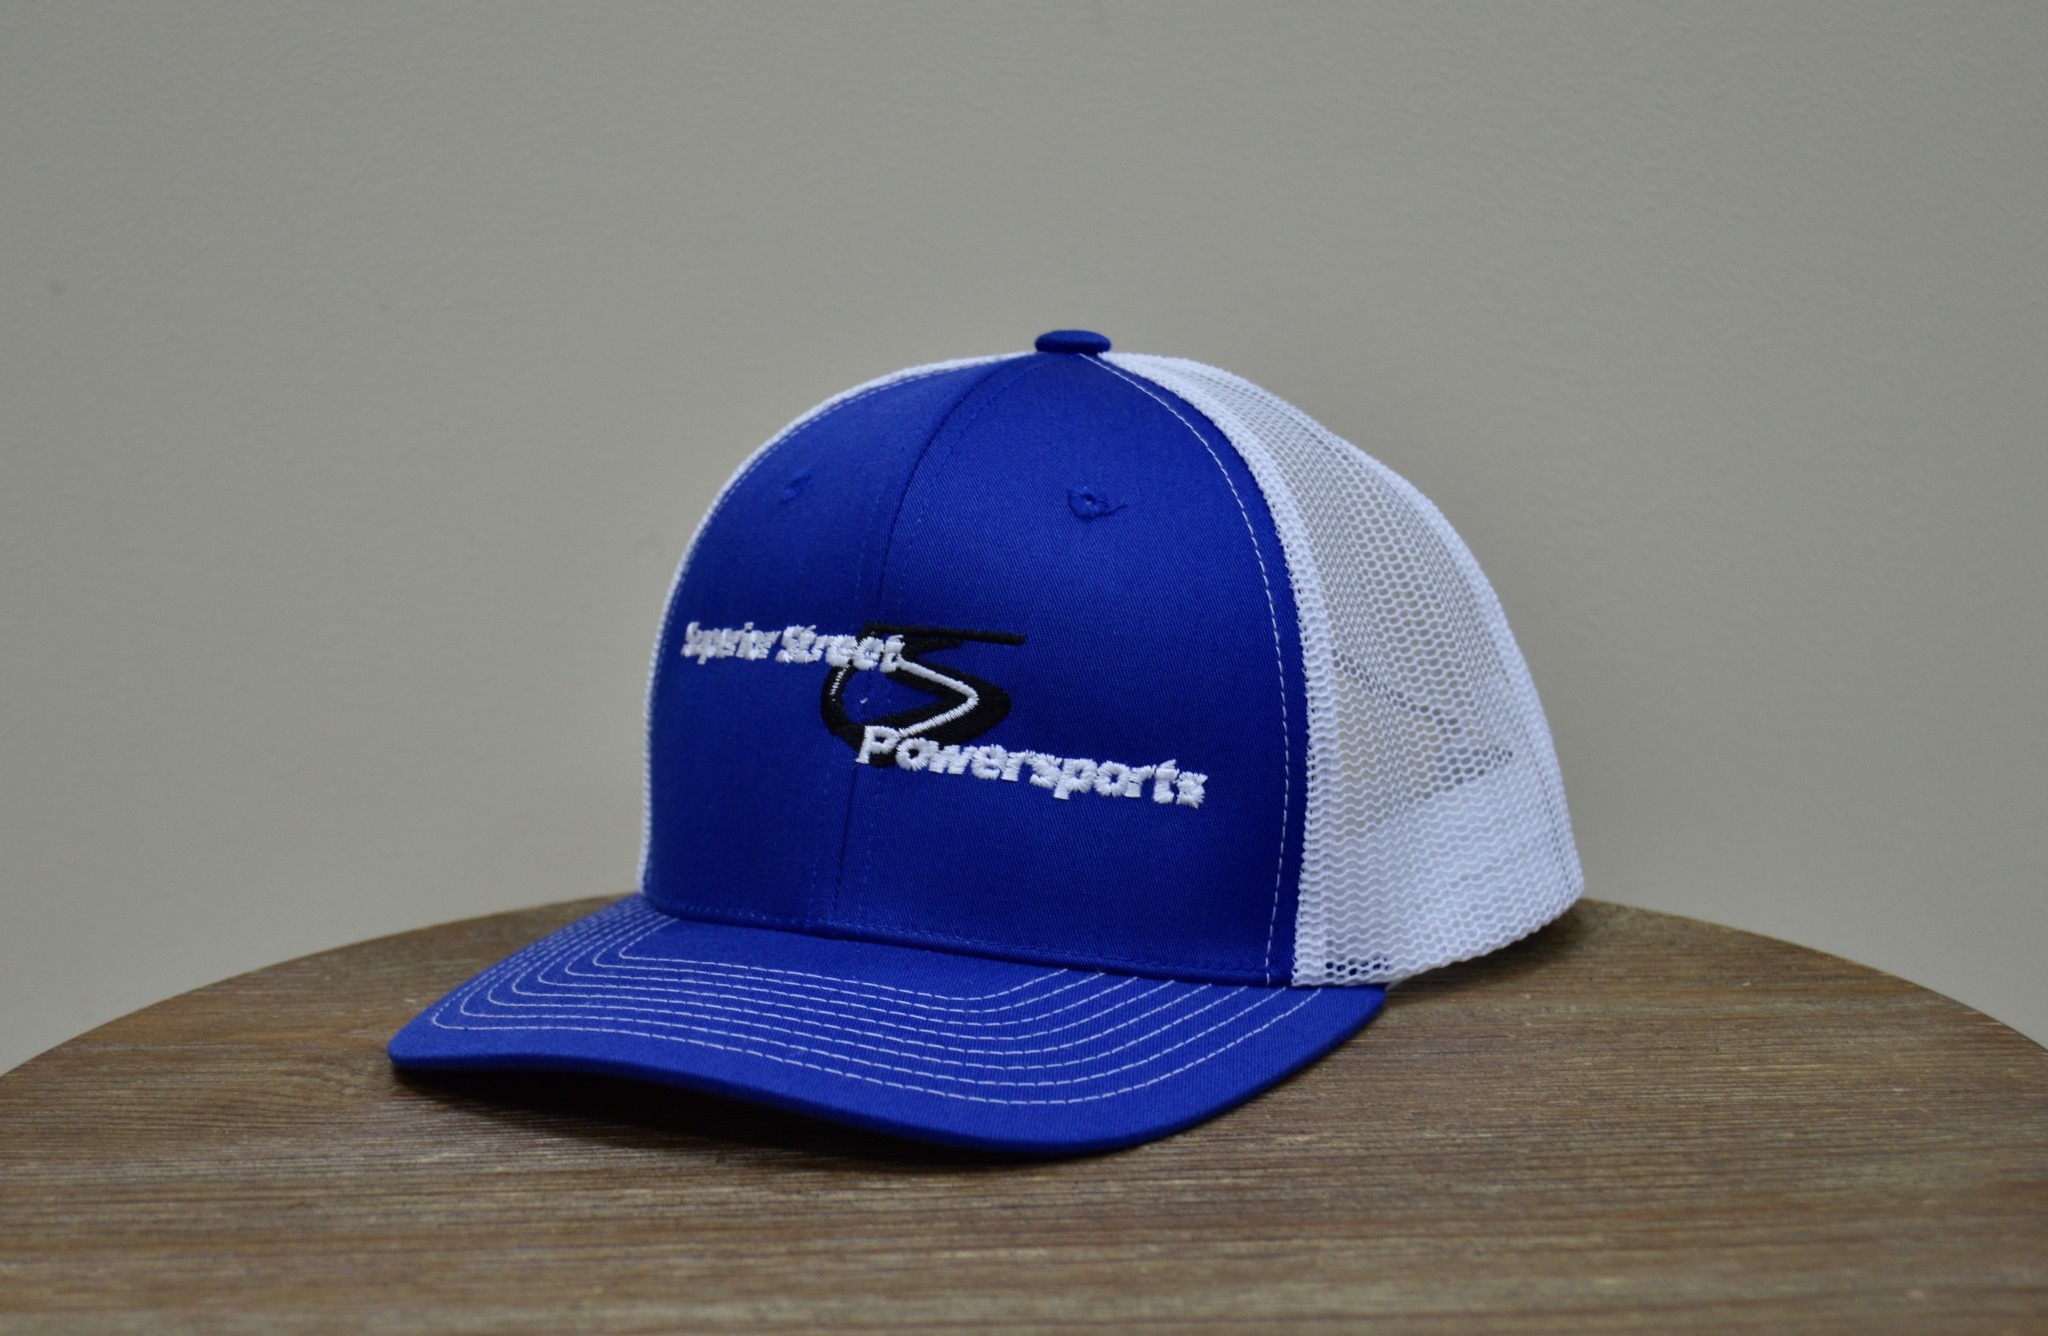 Superior Street Powersports | Trucker Snapback Baseball Hat - Blue/White